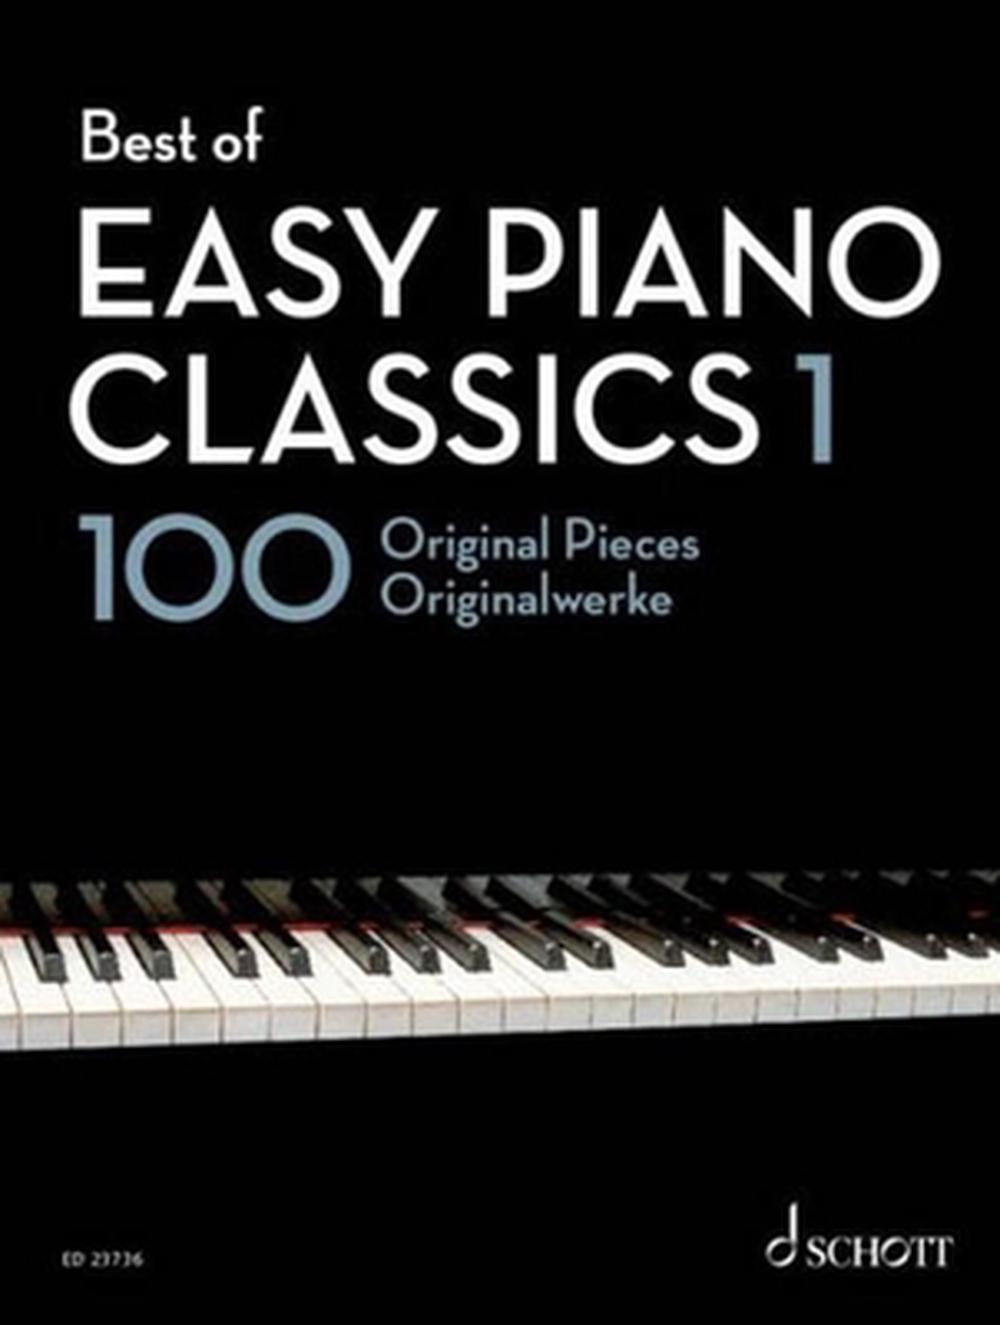 Best of Easy Piano Classics 1:100 pezzi originali di Hans-G?nter Heumann - Foto 1 di 1